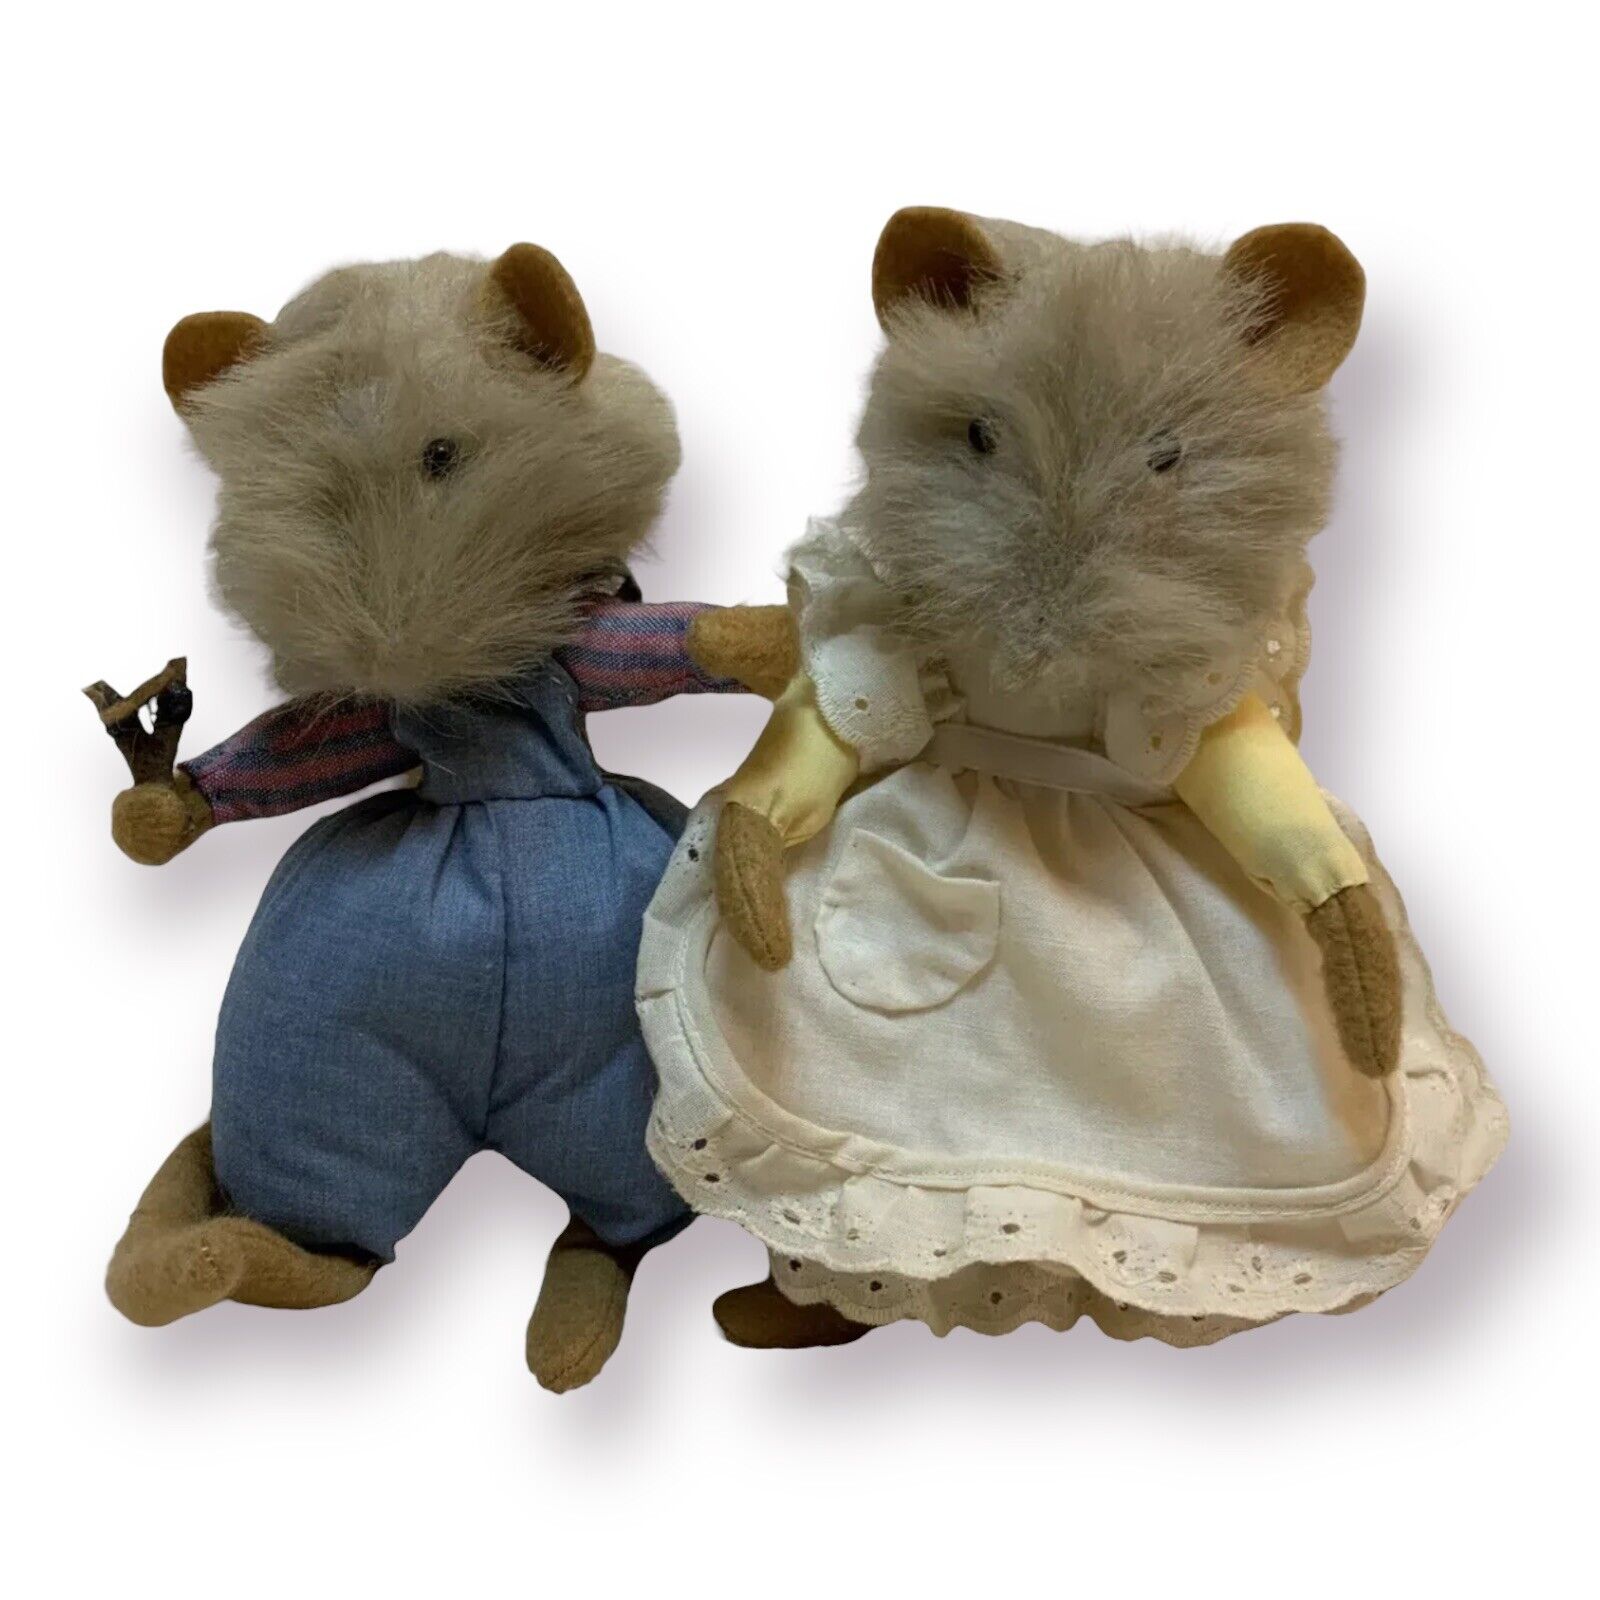 Vintage Felt and Fur Plush Mouse Mice Figurines 7” Handmade Pair Adorable